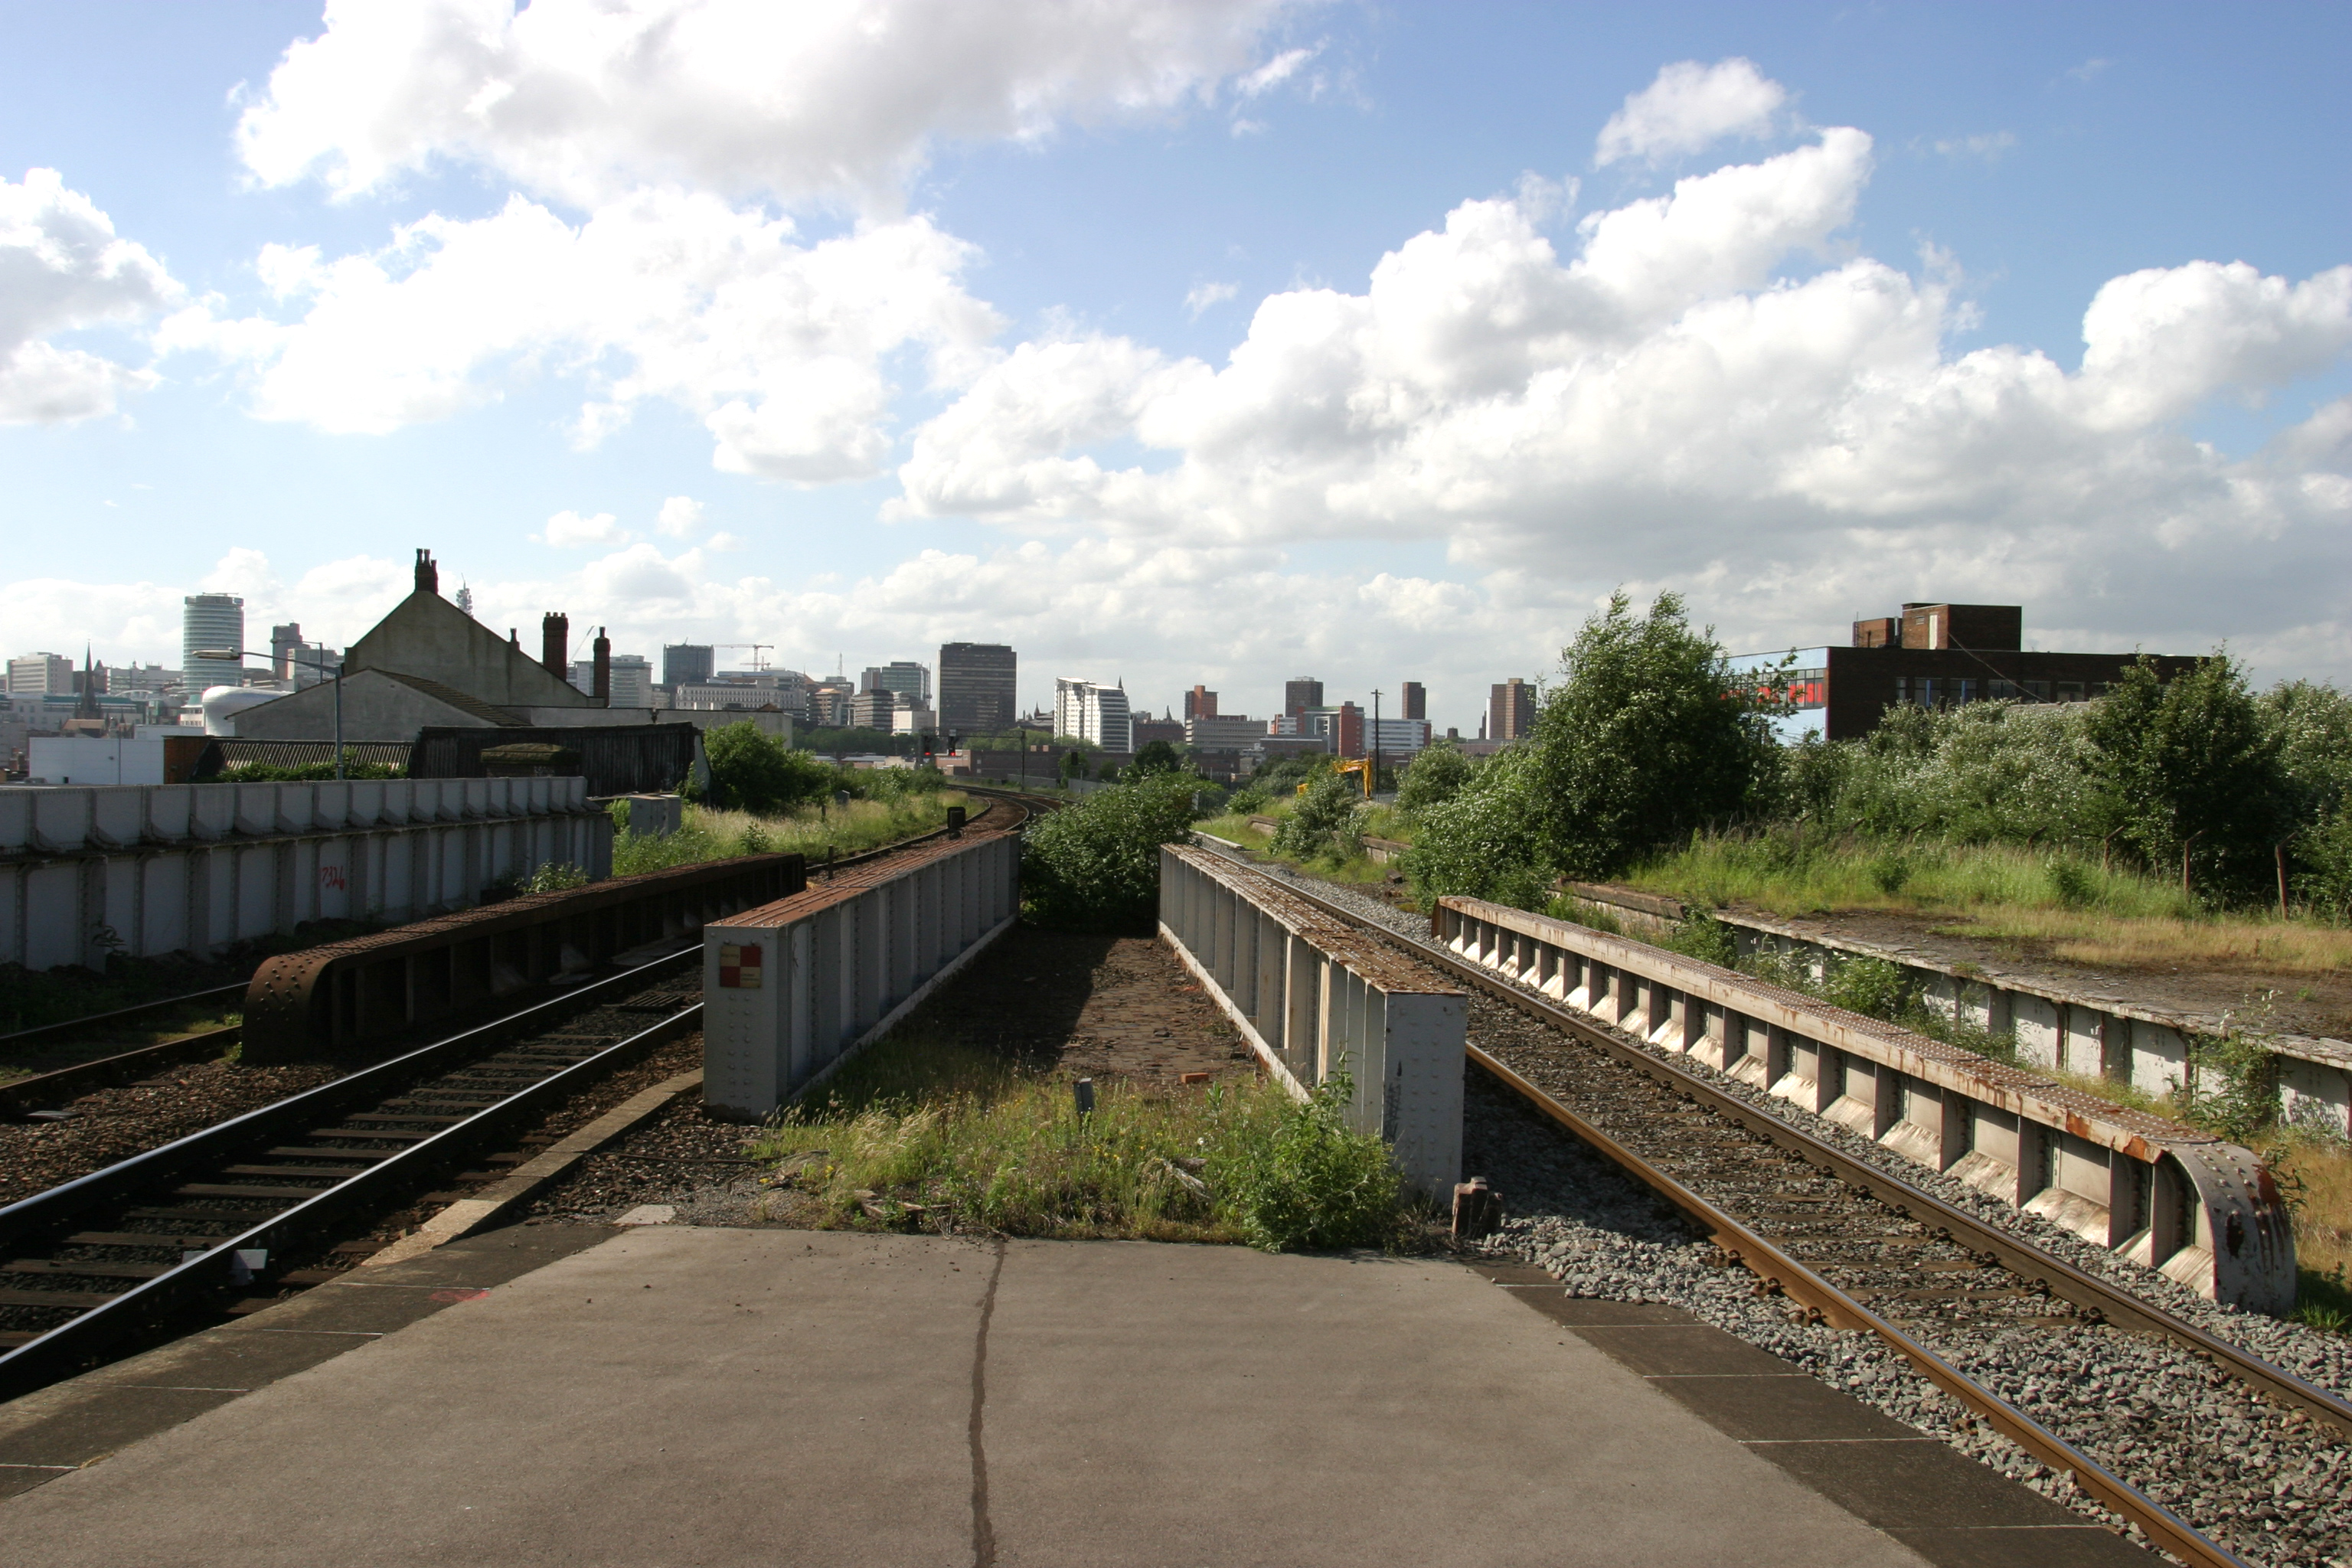 The one train runs into the city centre of Birmingham on a Saturday